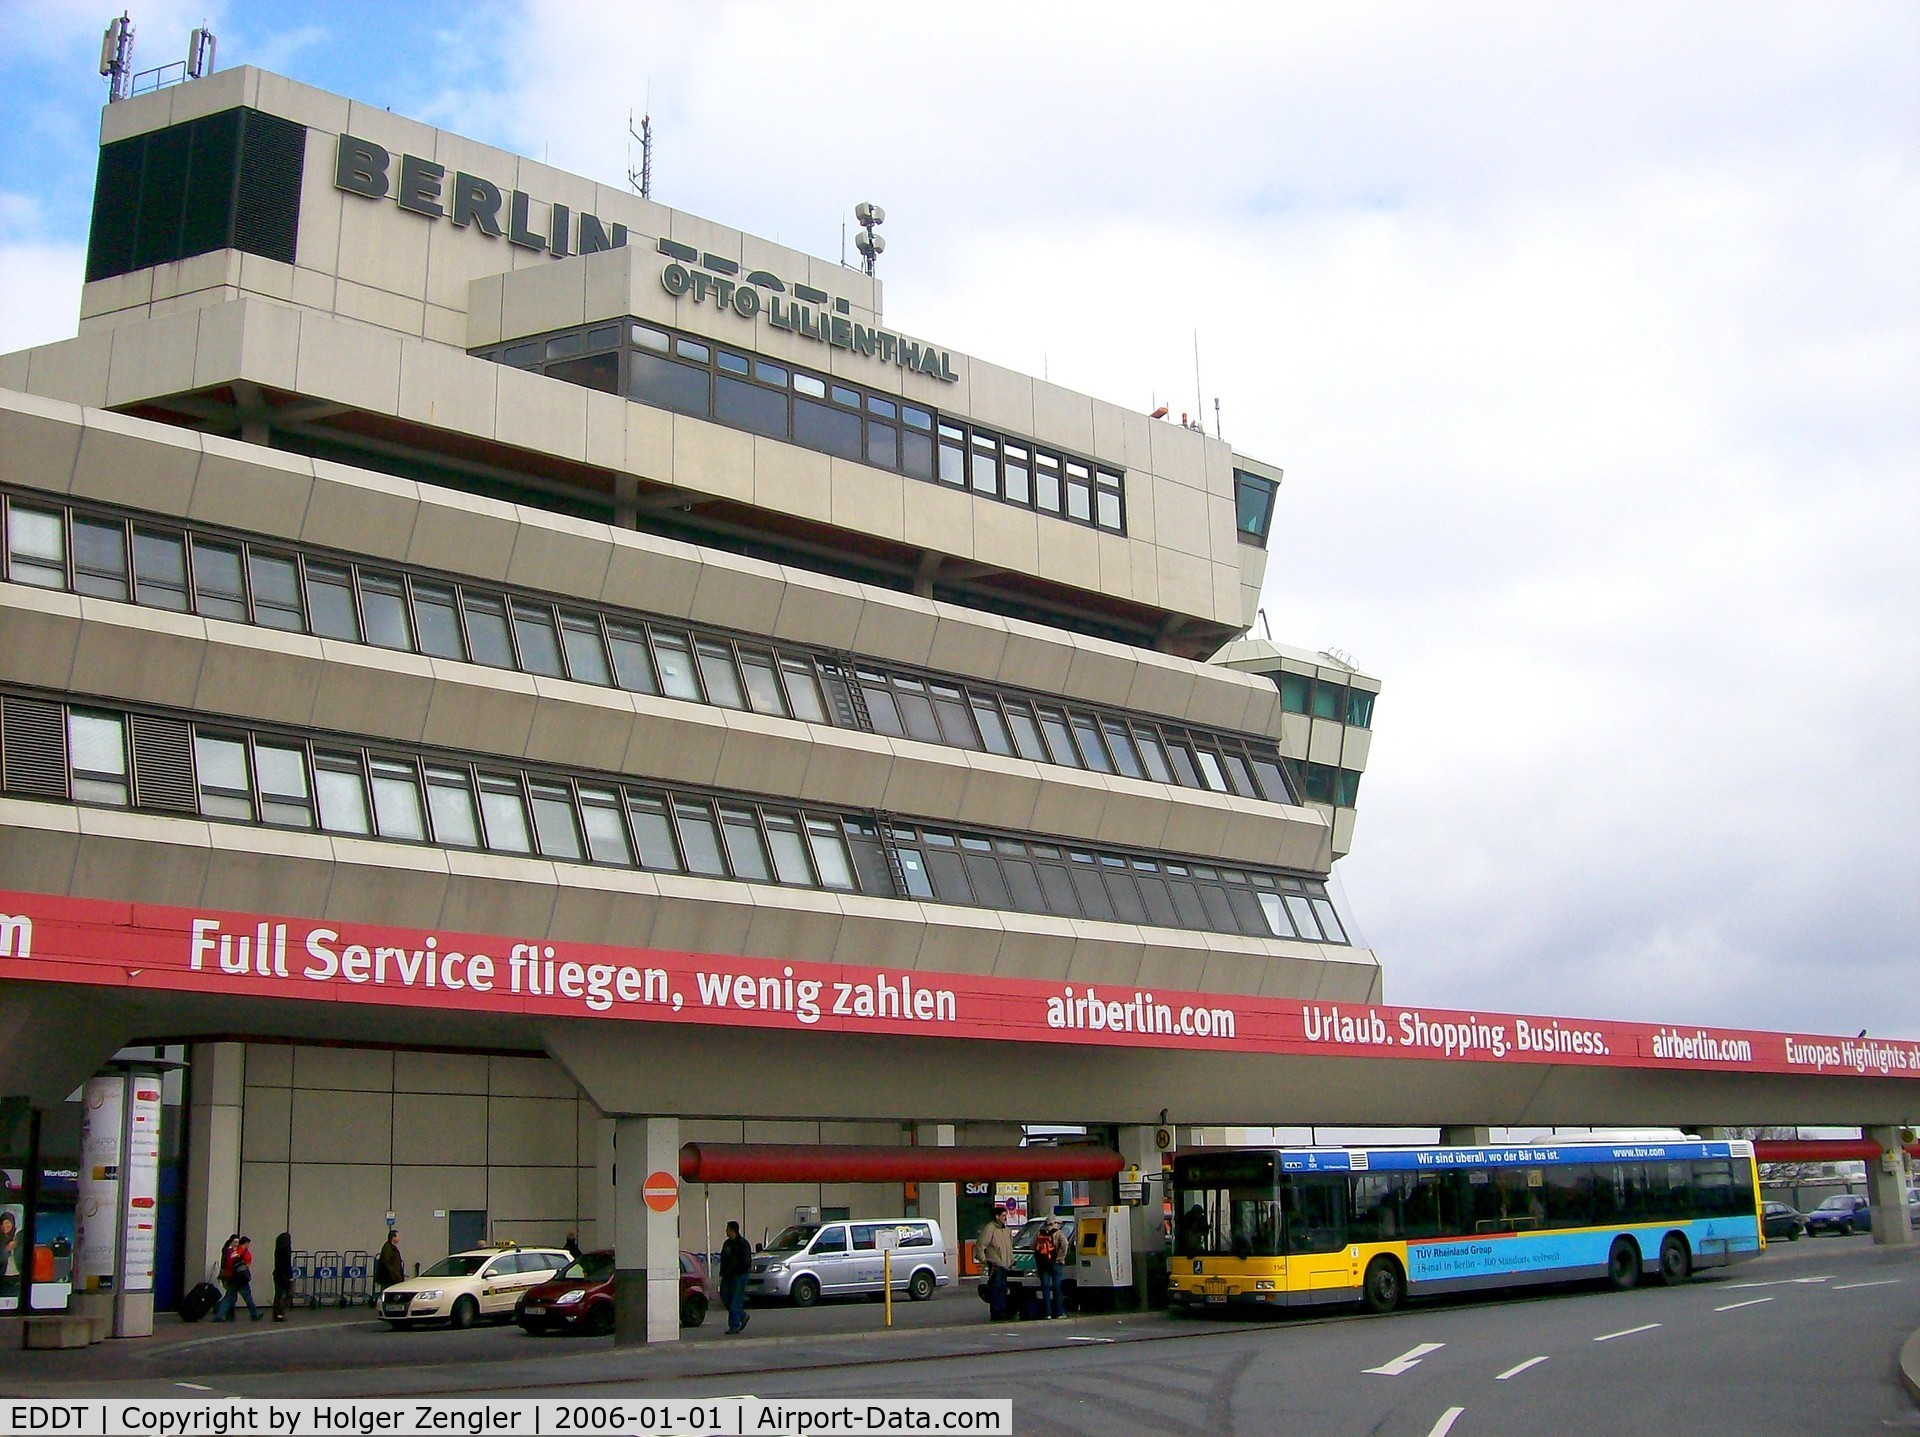 Tegel International Airport (closing in 2011), Berlin Germany (EDDT) - Berlin-Tegel airport building 